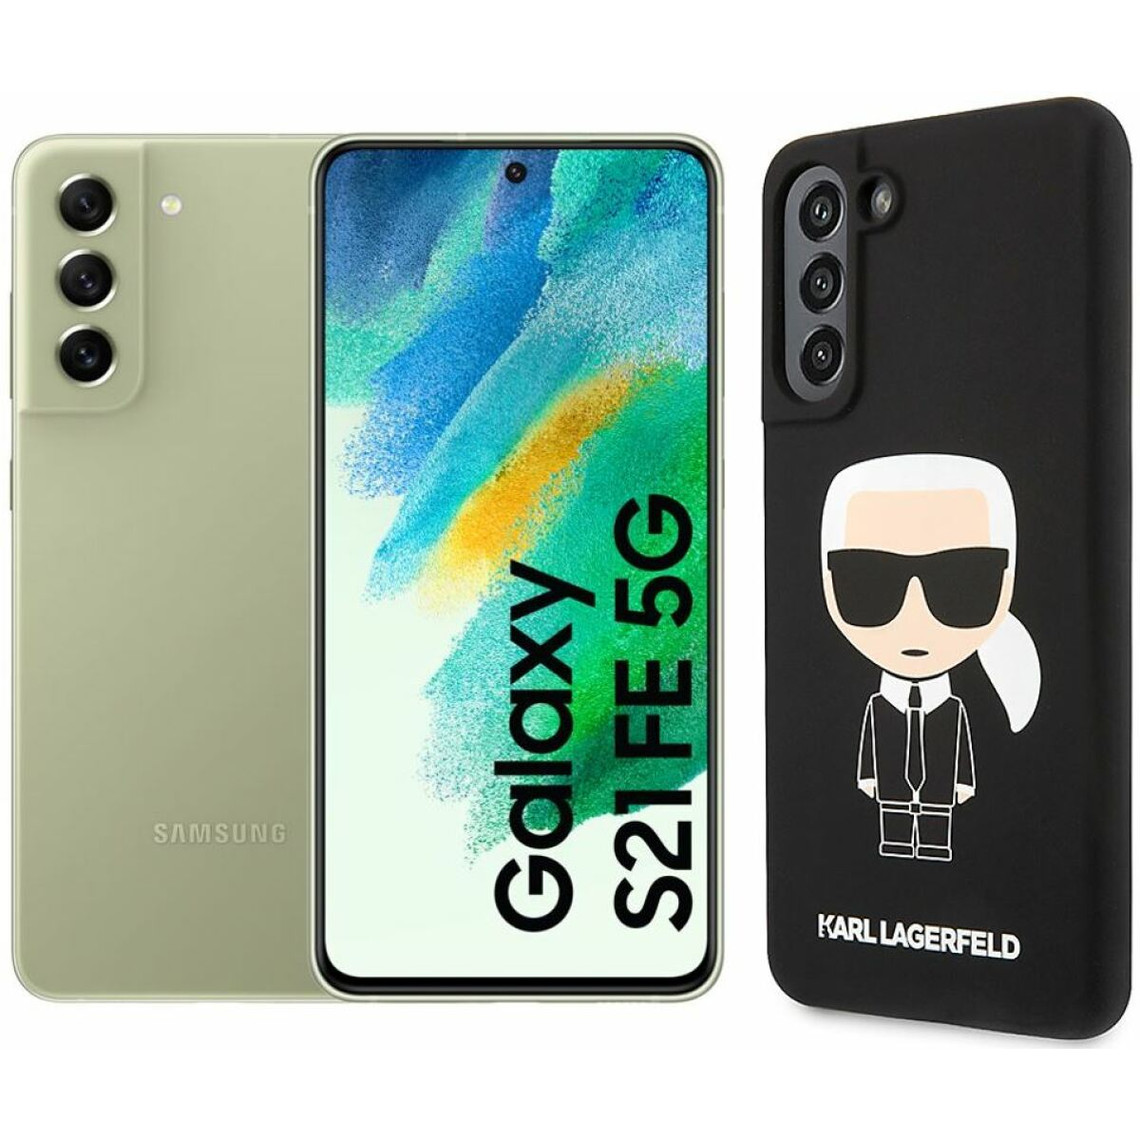 Samsung Galaxy S21 FE - 5G - 128GO - Olive + Coque Karl Lagerfeld offerte